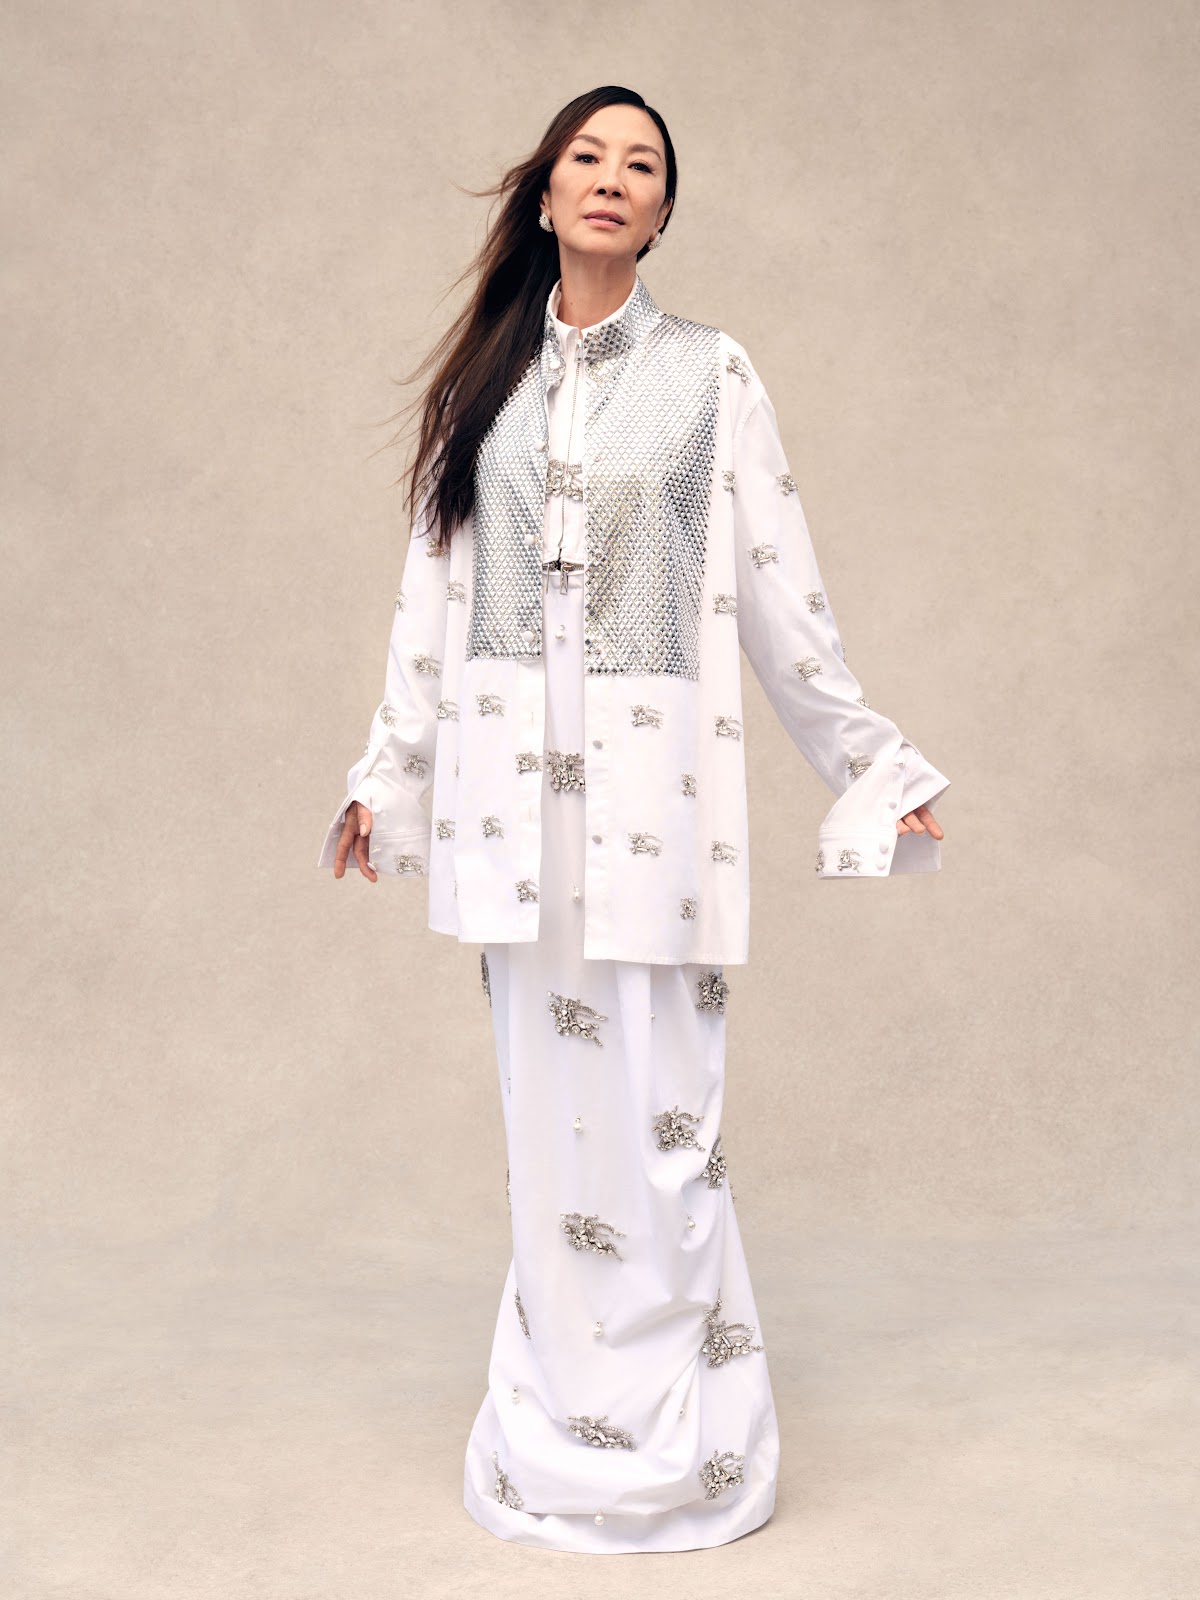 Michelle Yeoh in Elle USA November 2022 by Sharif Hamza